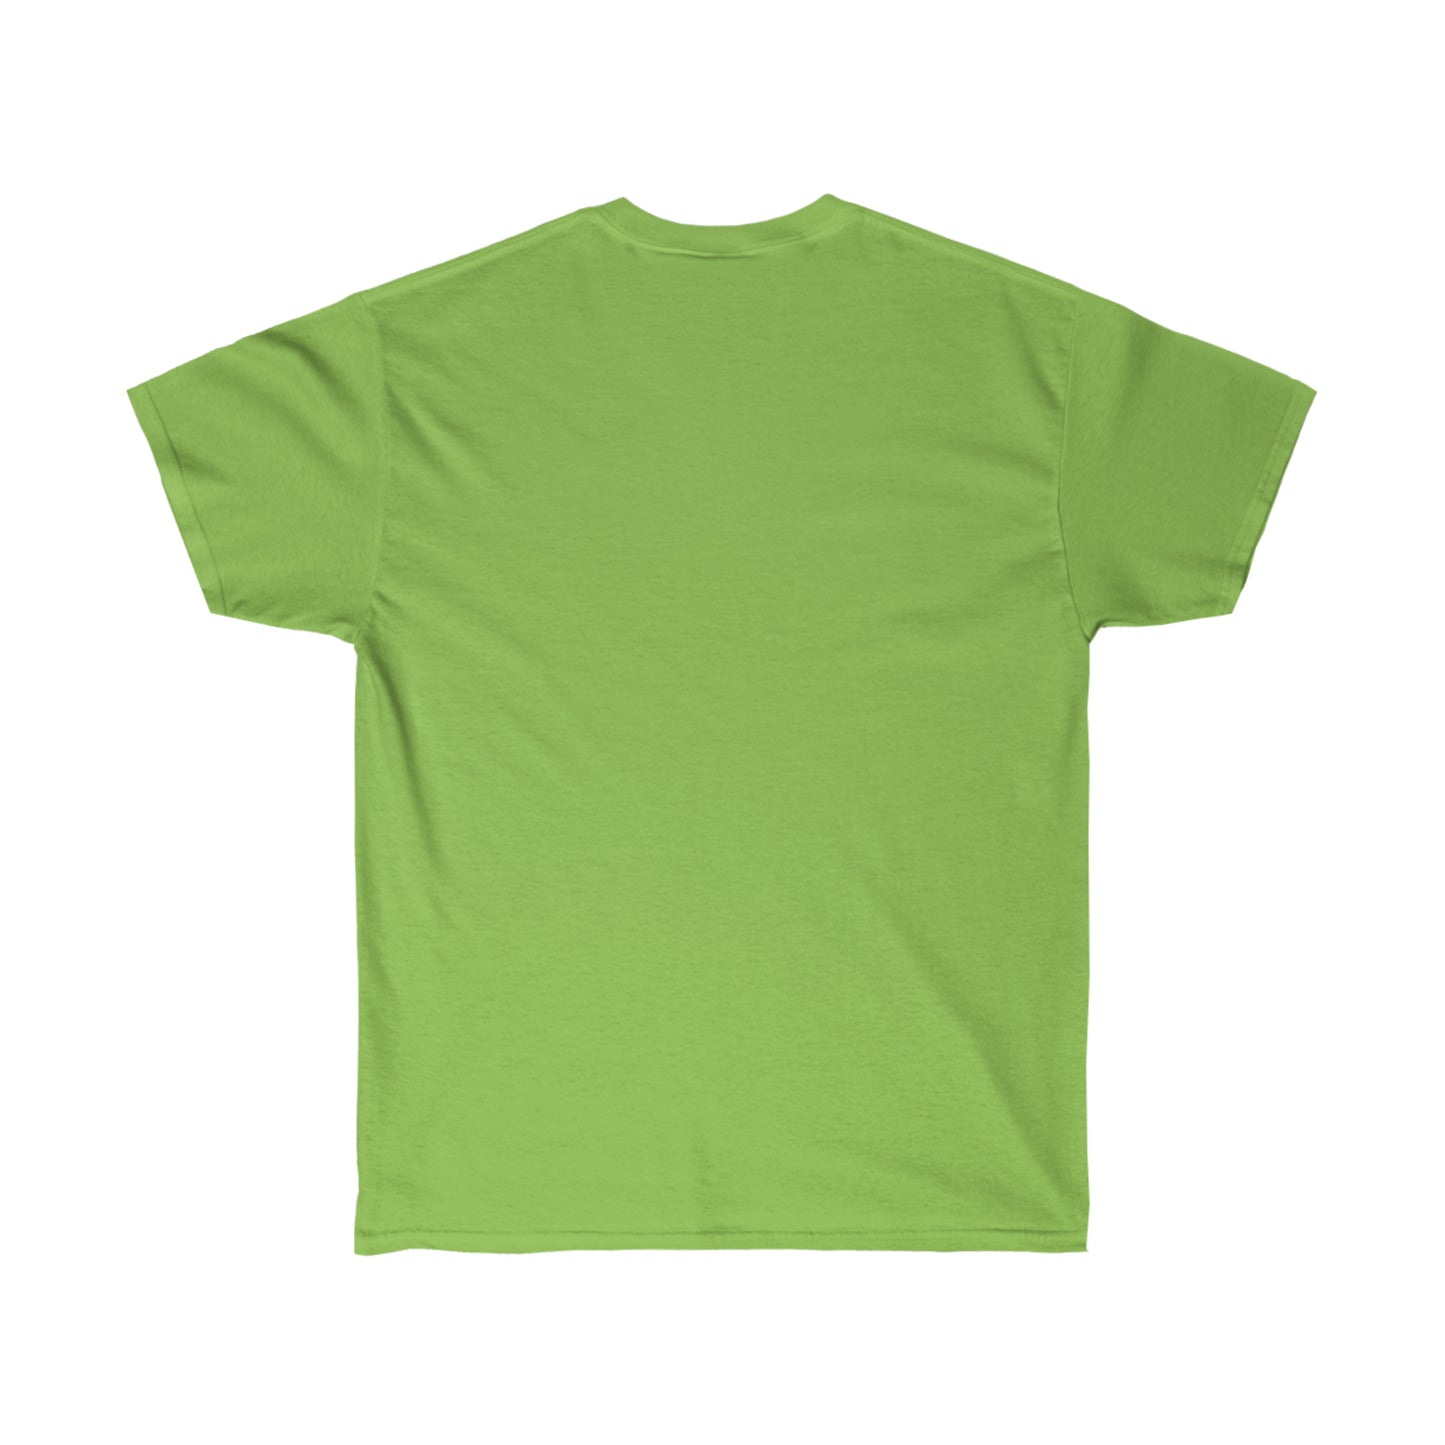 Gelatypus T-Shirt